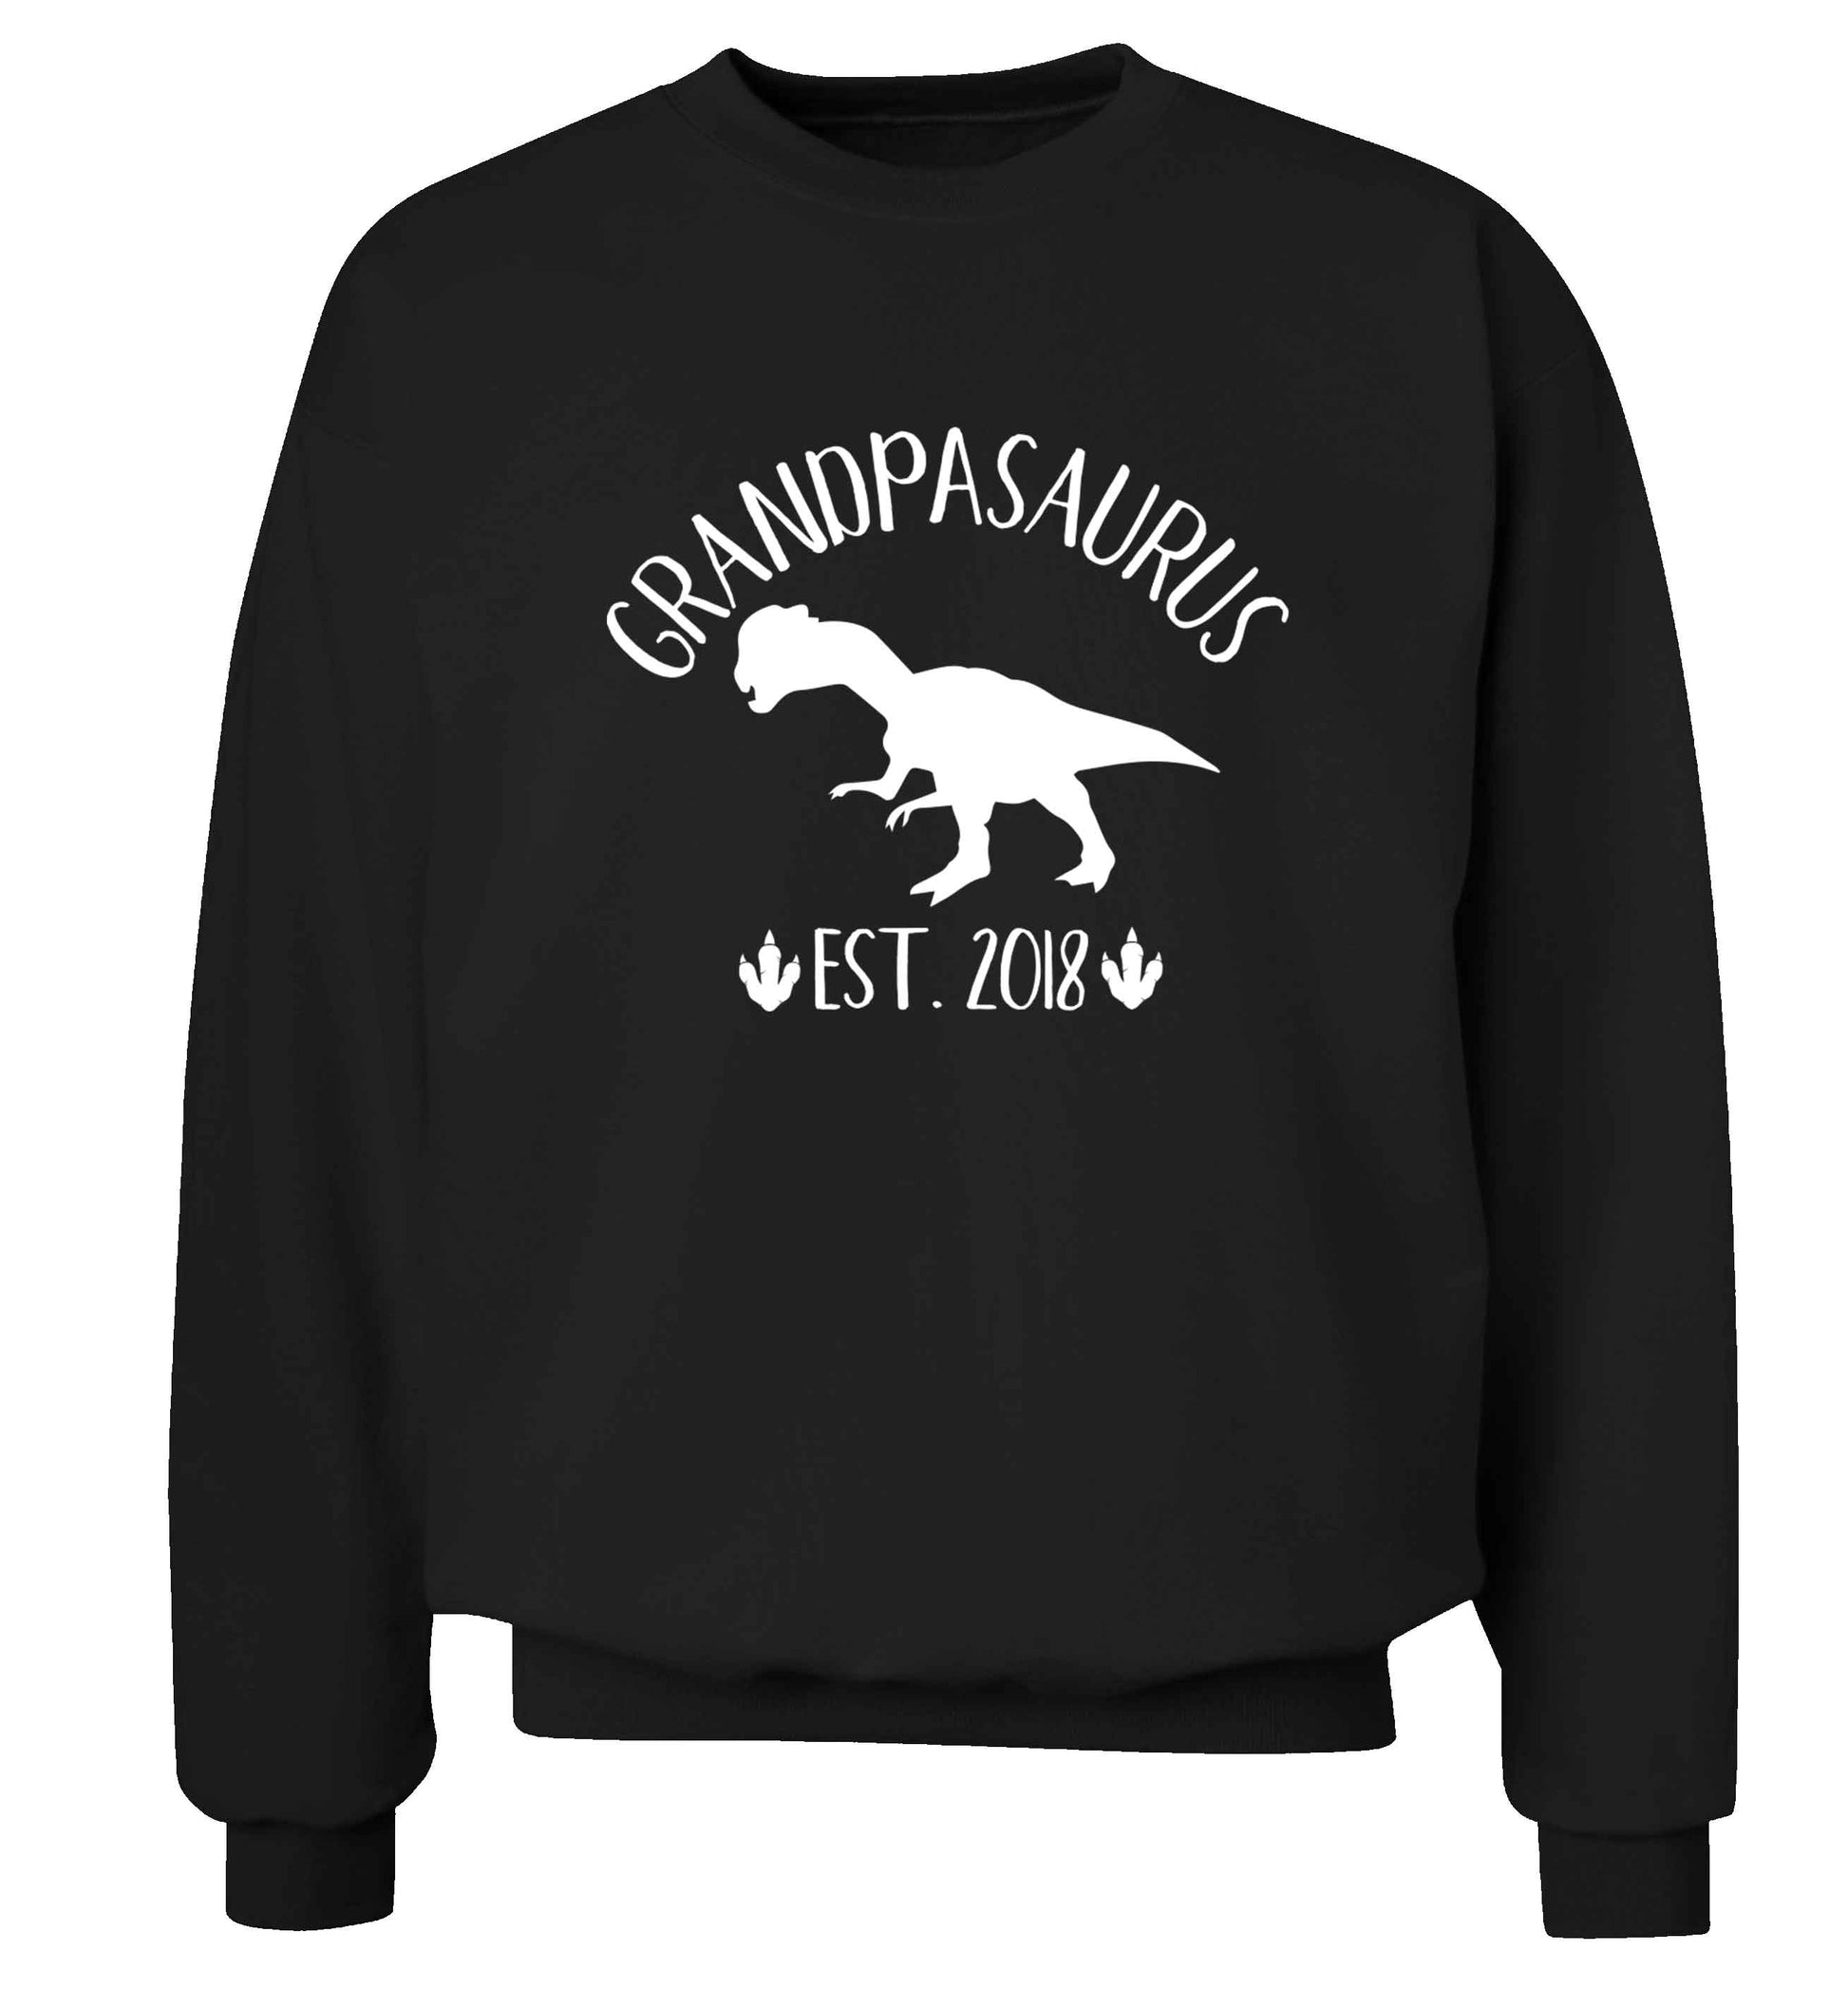 Personalised grandpasaurus since (custom date) Adult's unisex black Sweater 2XL